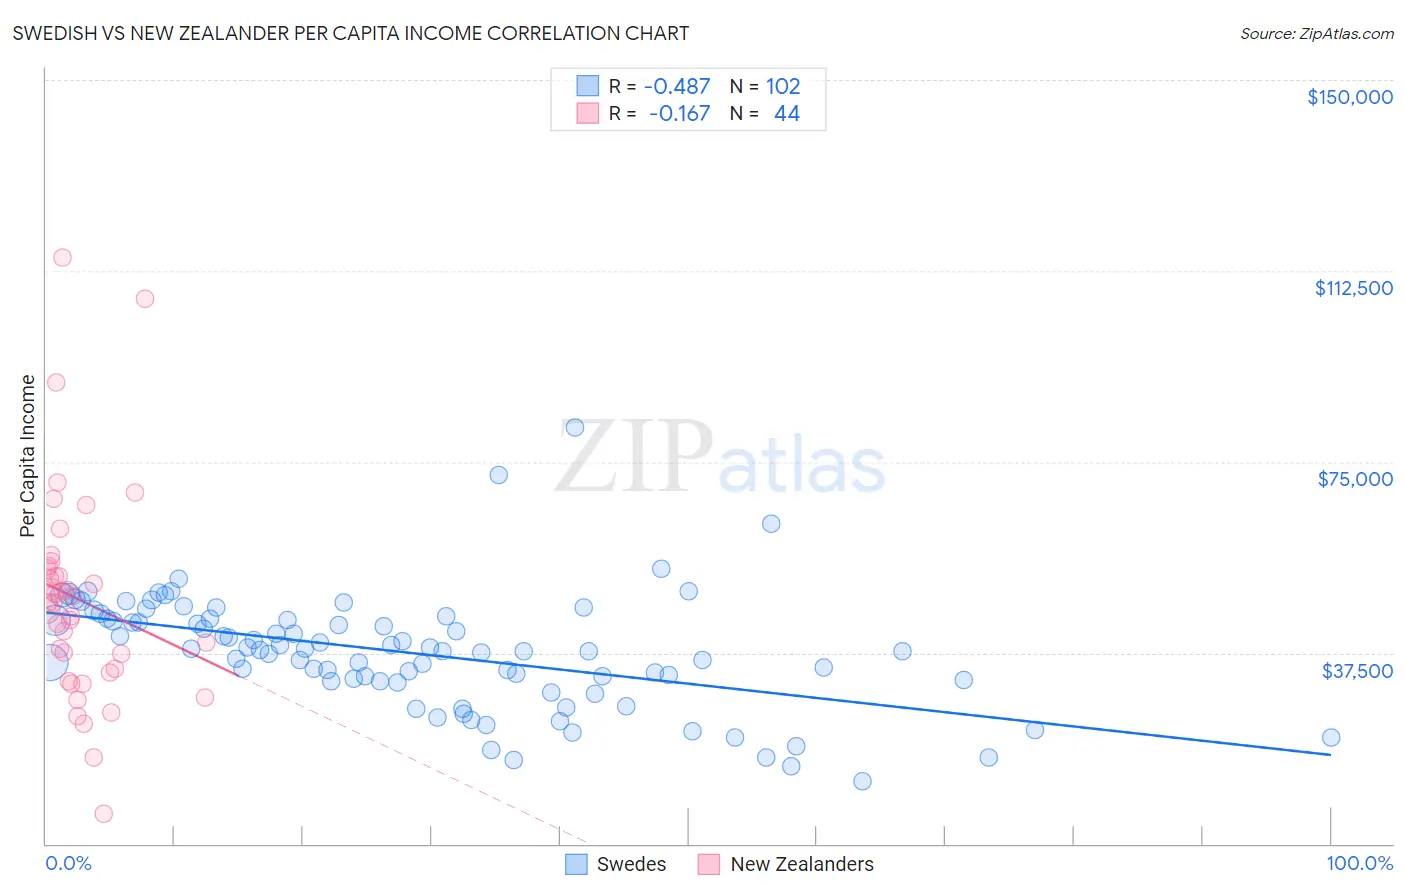 Swedish vs New Zealander Per Capita Income